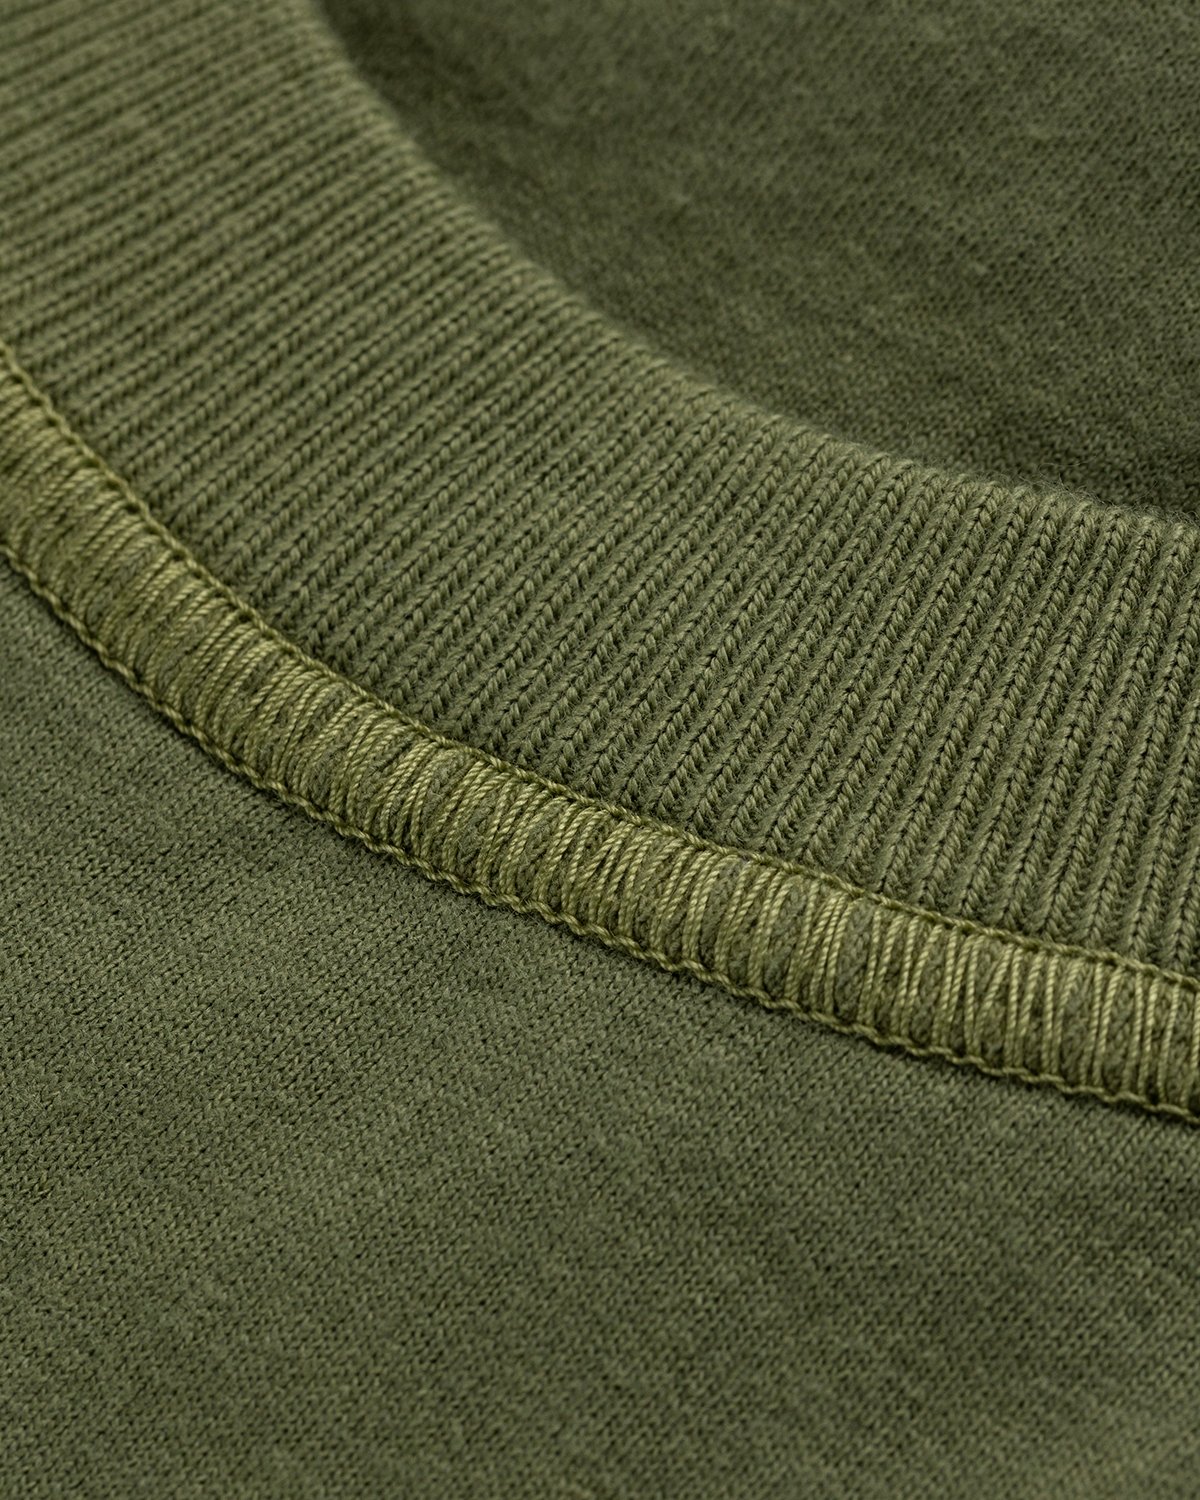 Stone Island - 23757 Garment-Dyed Fissato T-Shirt Olive Green - Clothing - Green - Image 4